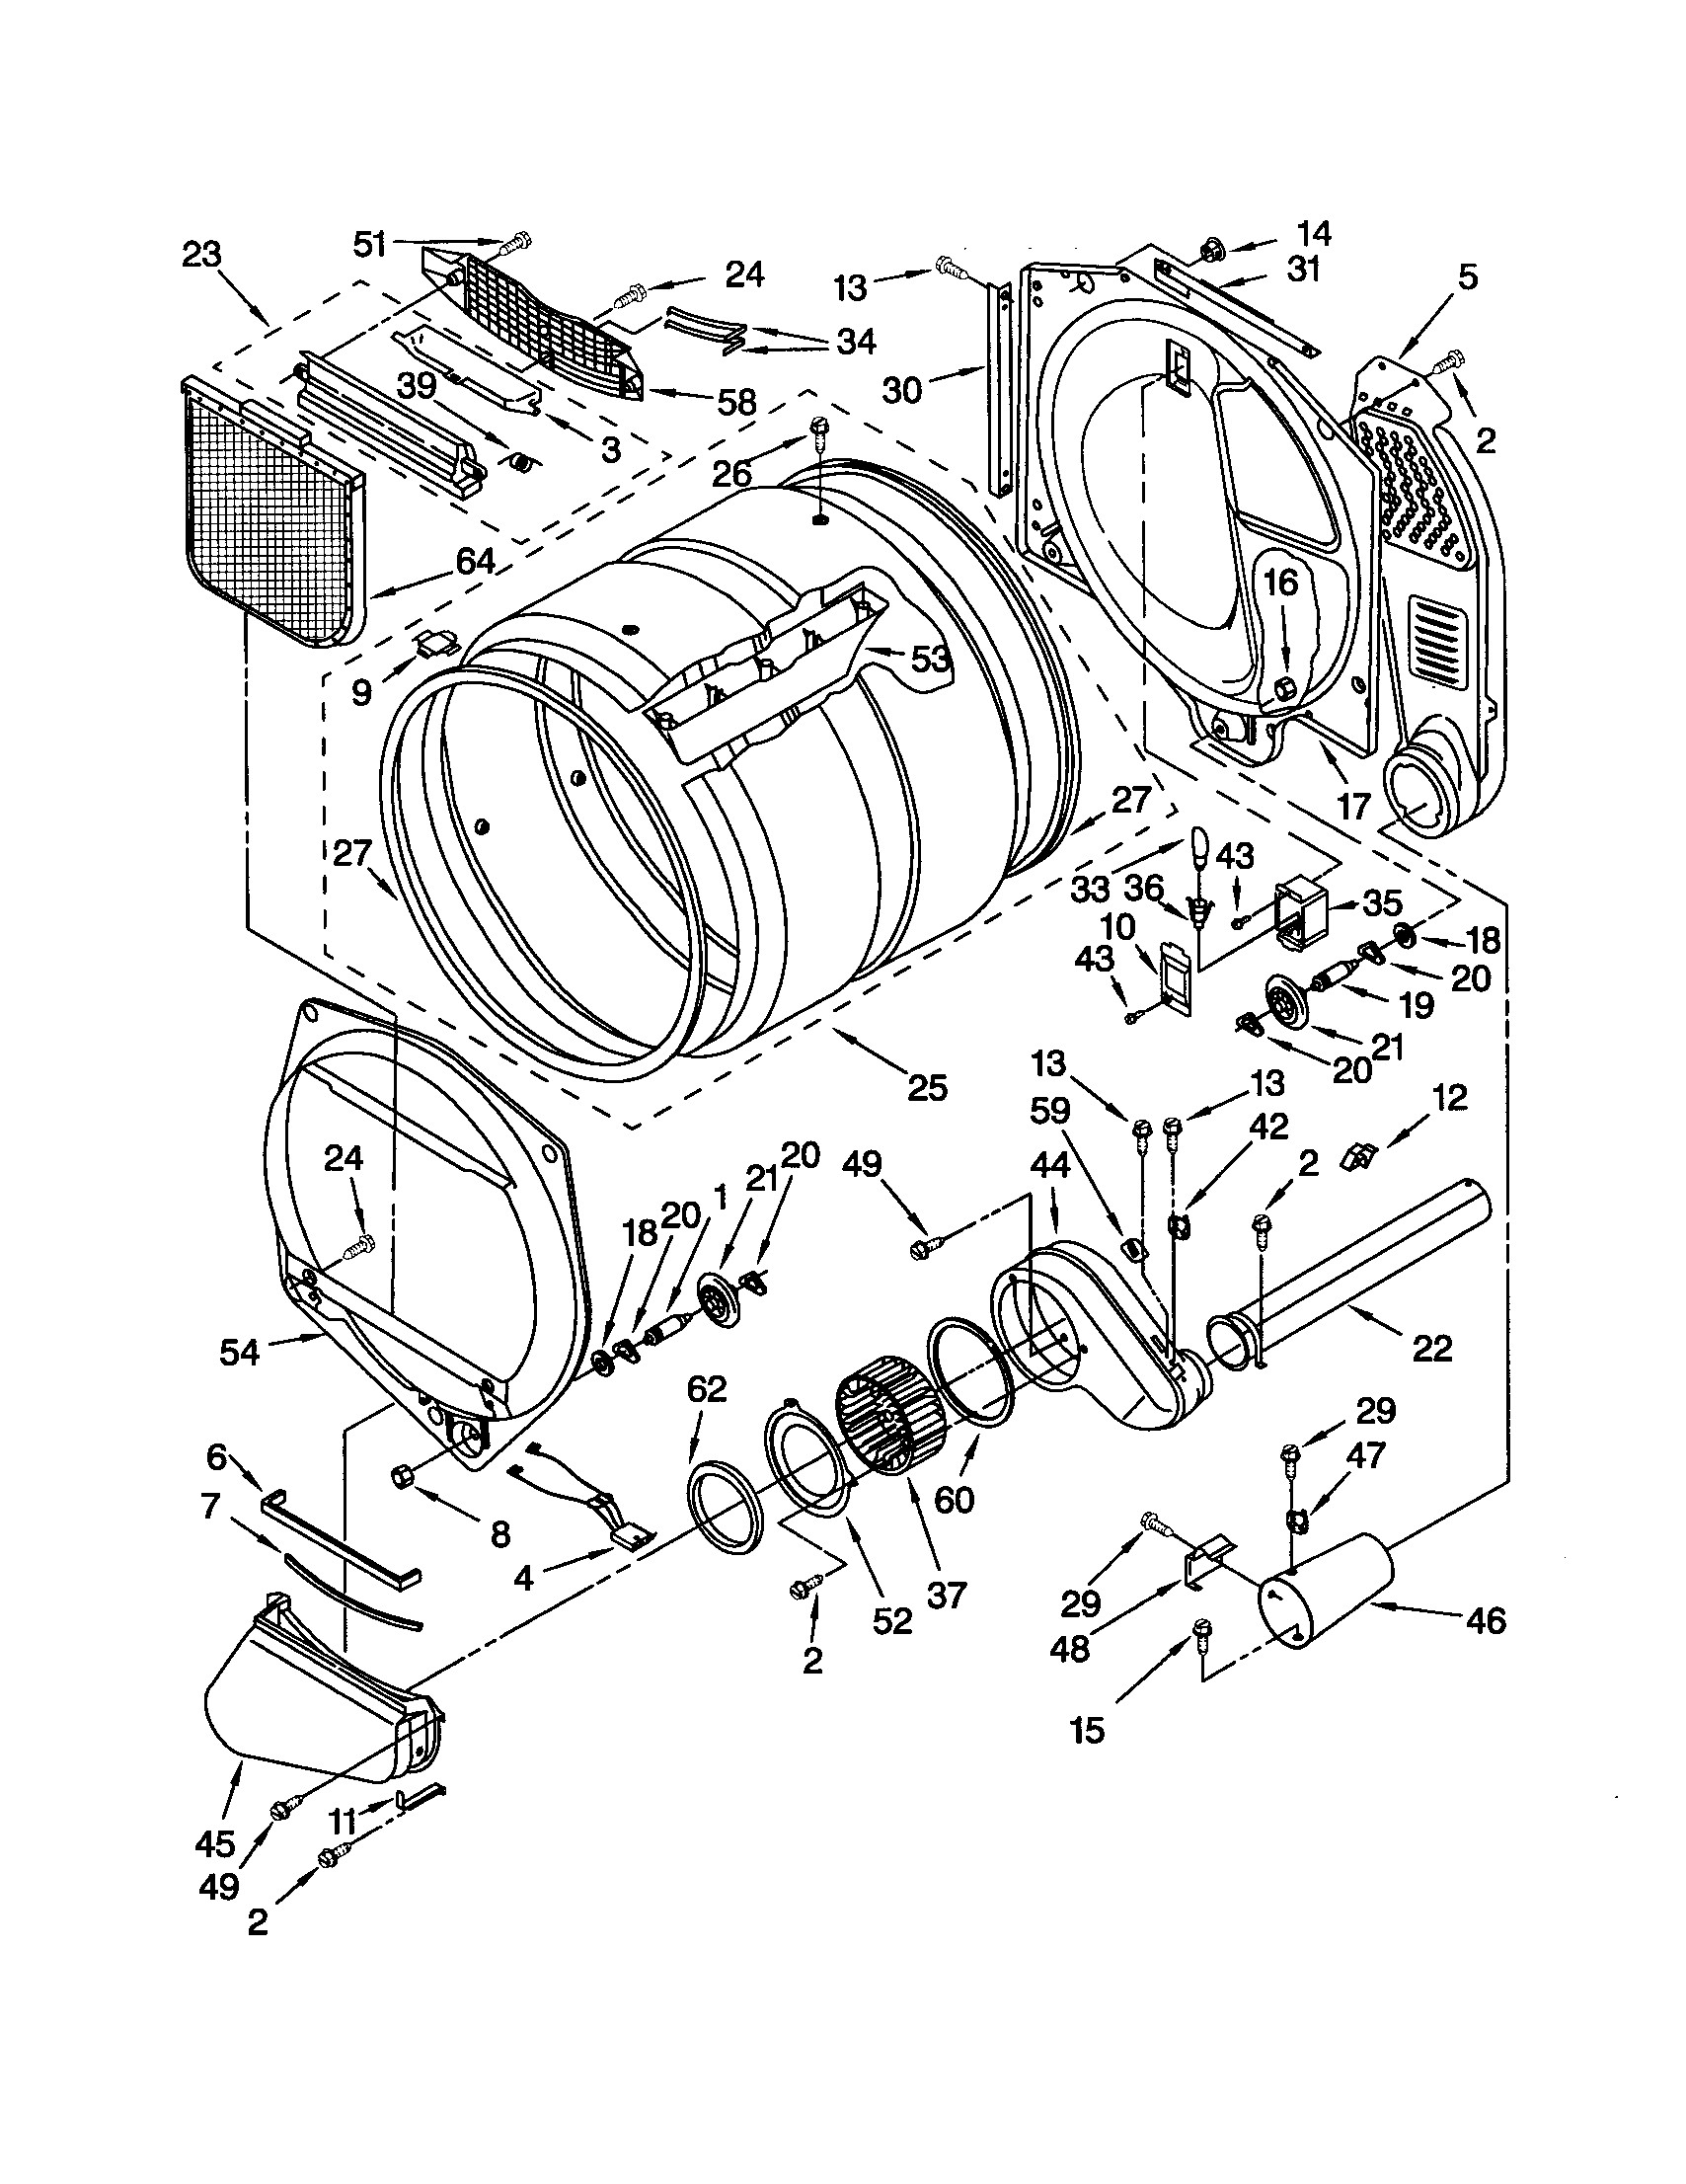 Kenmore Elite Gas Dryer Wiring Diagram